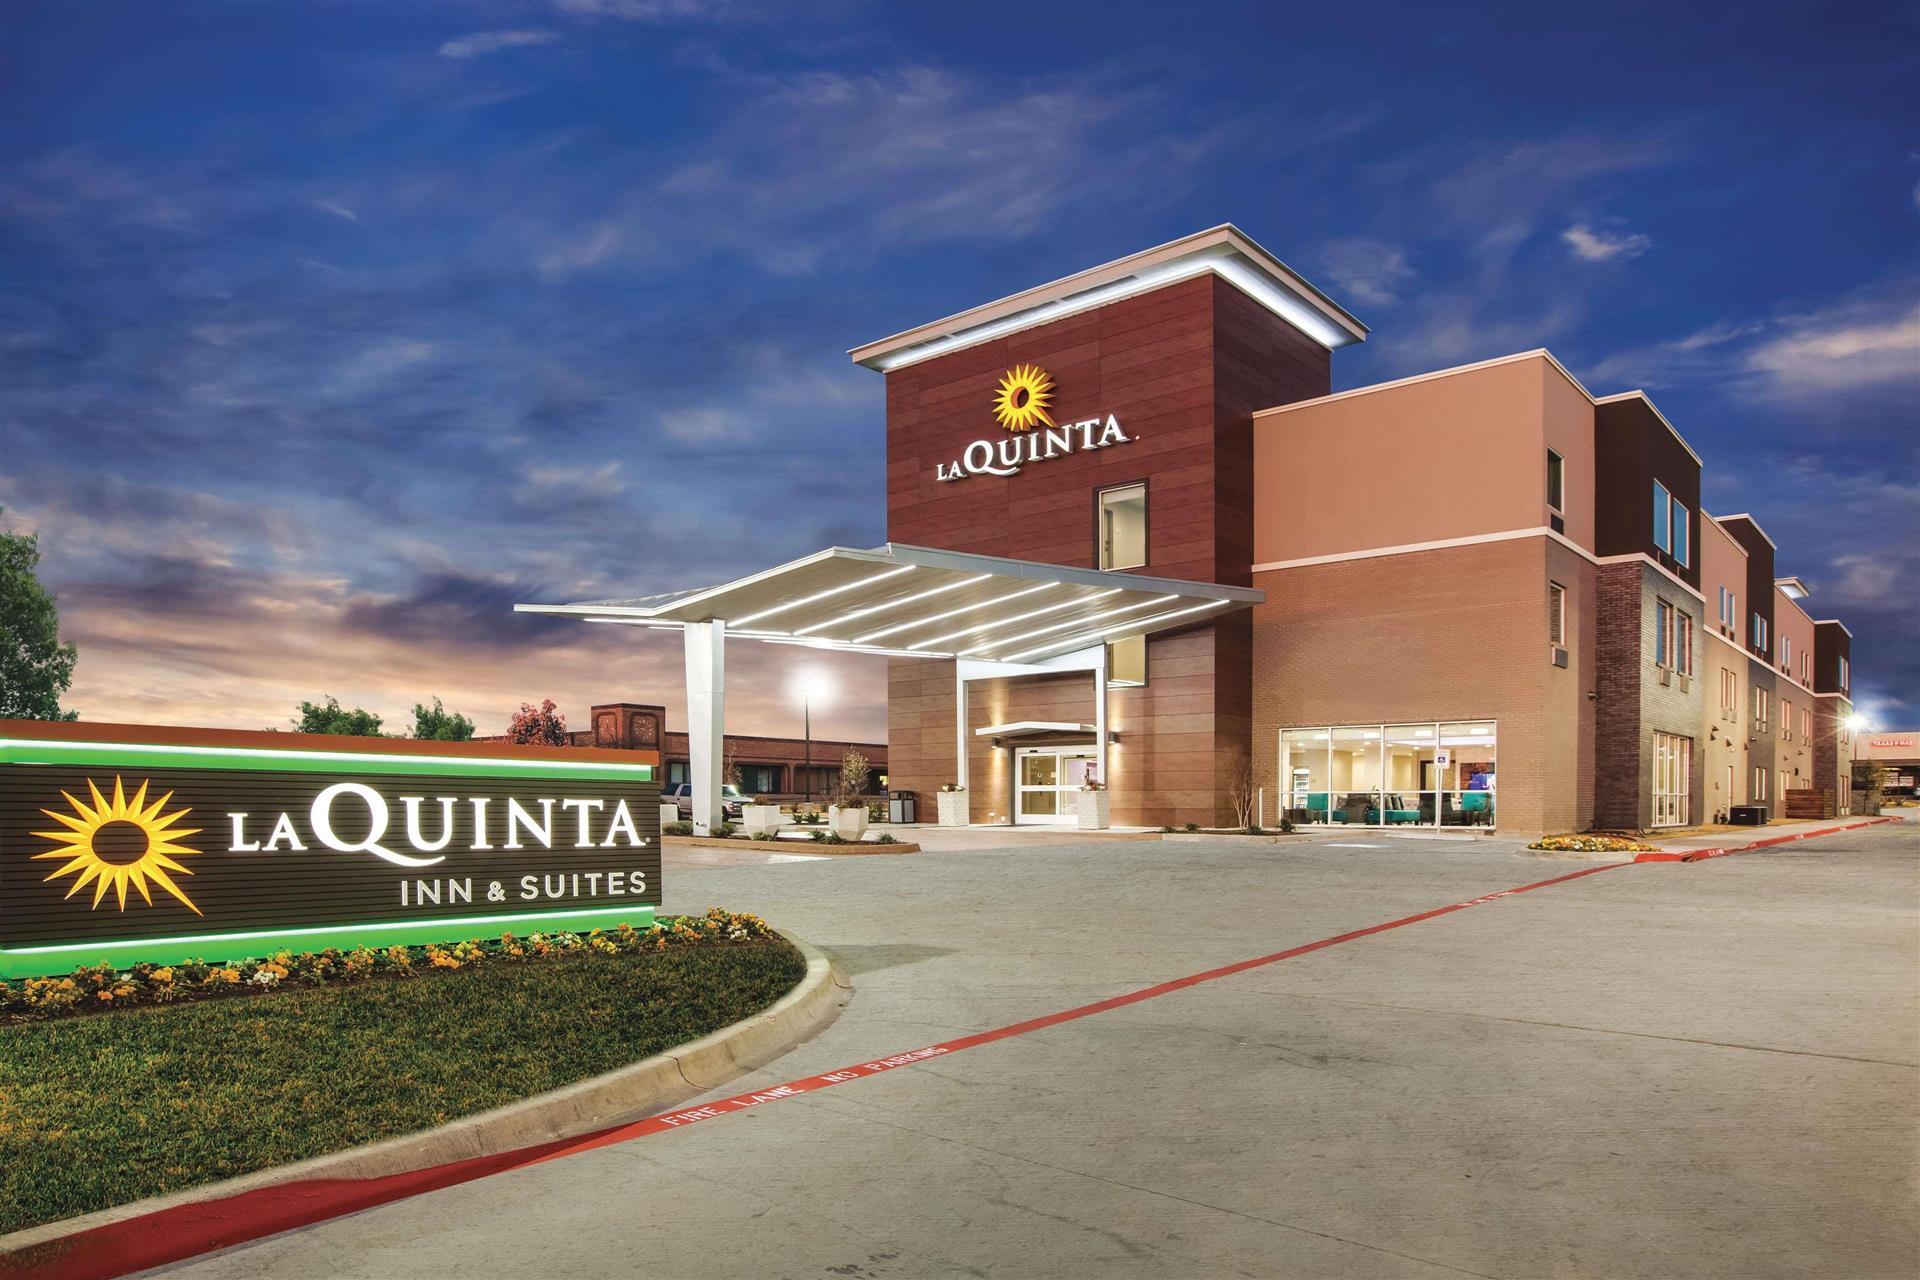 La Quinta Inn & Suites by Wyndham Dallas Northeast-Arboretum in Garland, TX